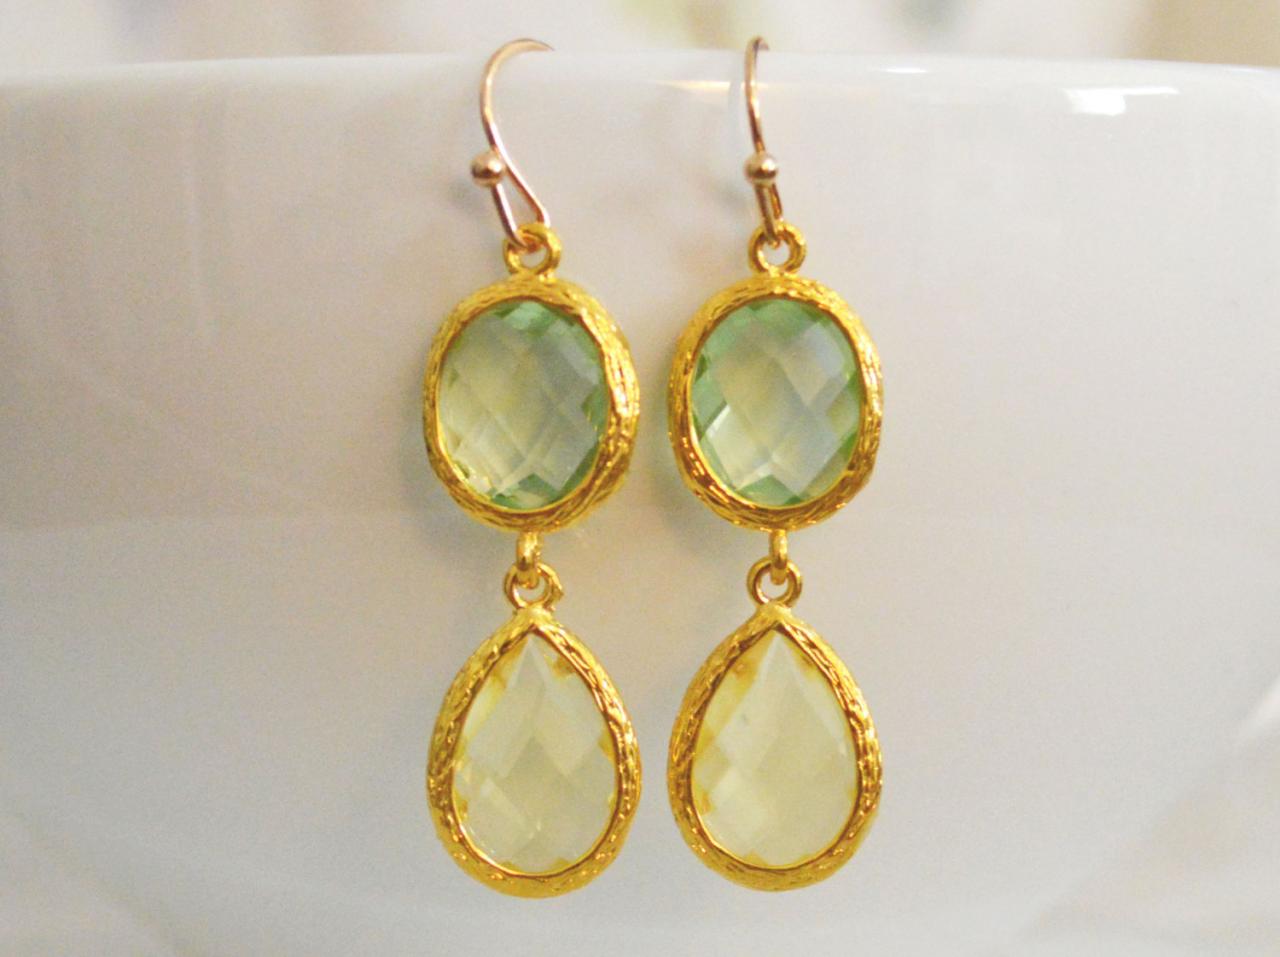 SALE) B-031 Glass earrings, Chrysolite & lemon yellow drop earrings, Dangle earrings, Gold plated/Bridesmaid gifts/Everyday jewelry/